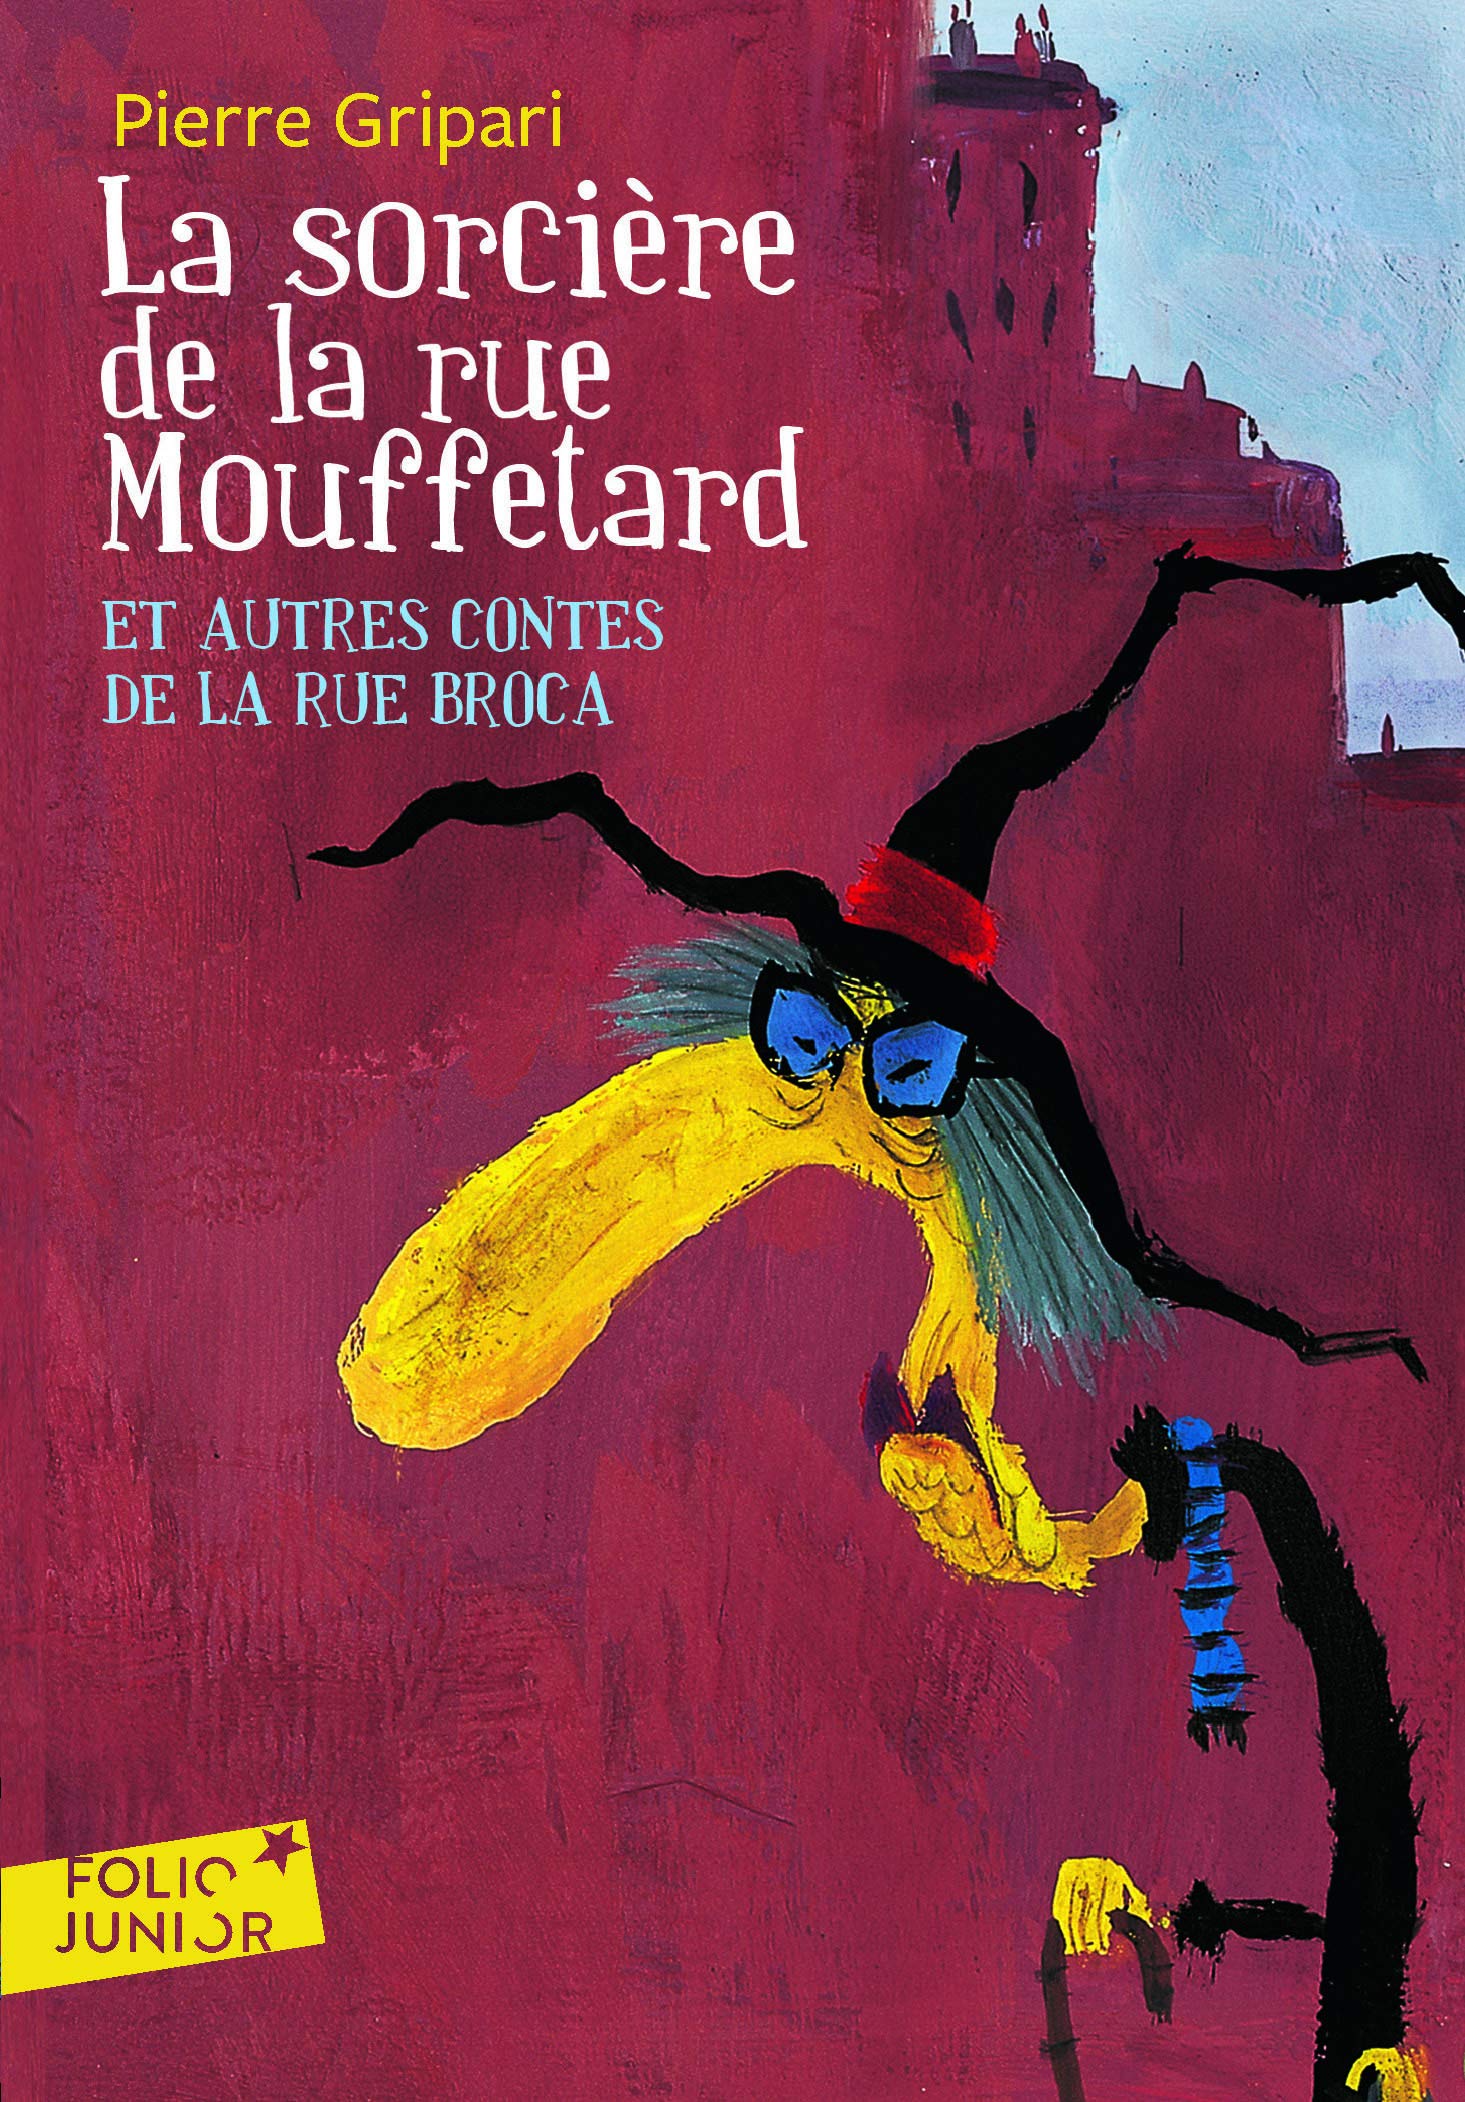 La sorciere de la rue Mouffetard et autres contes de la rue Broca | Pierre Gripari